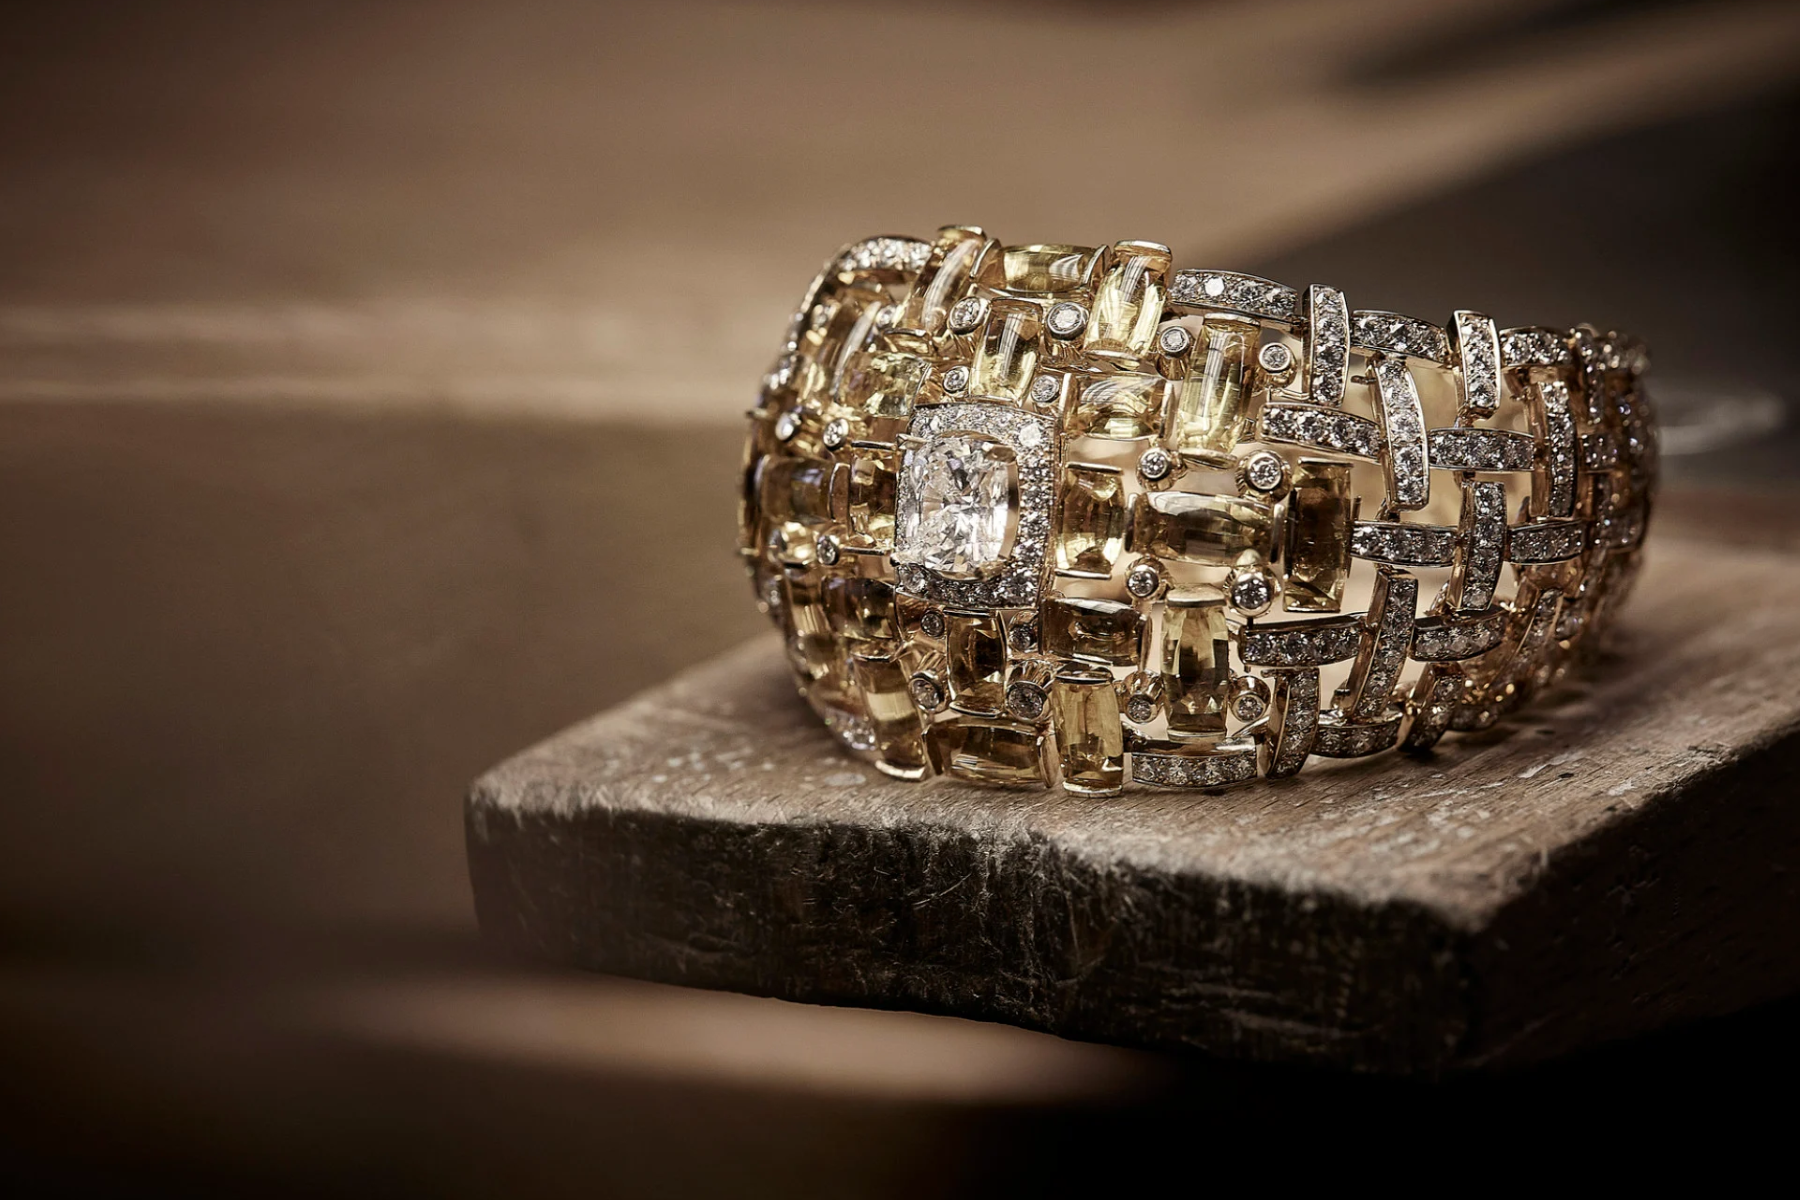 Chanel’s Tweed Byzance bracelet